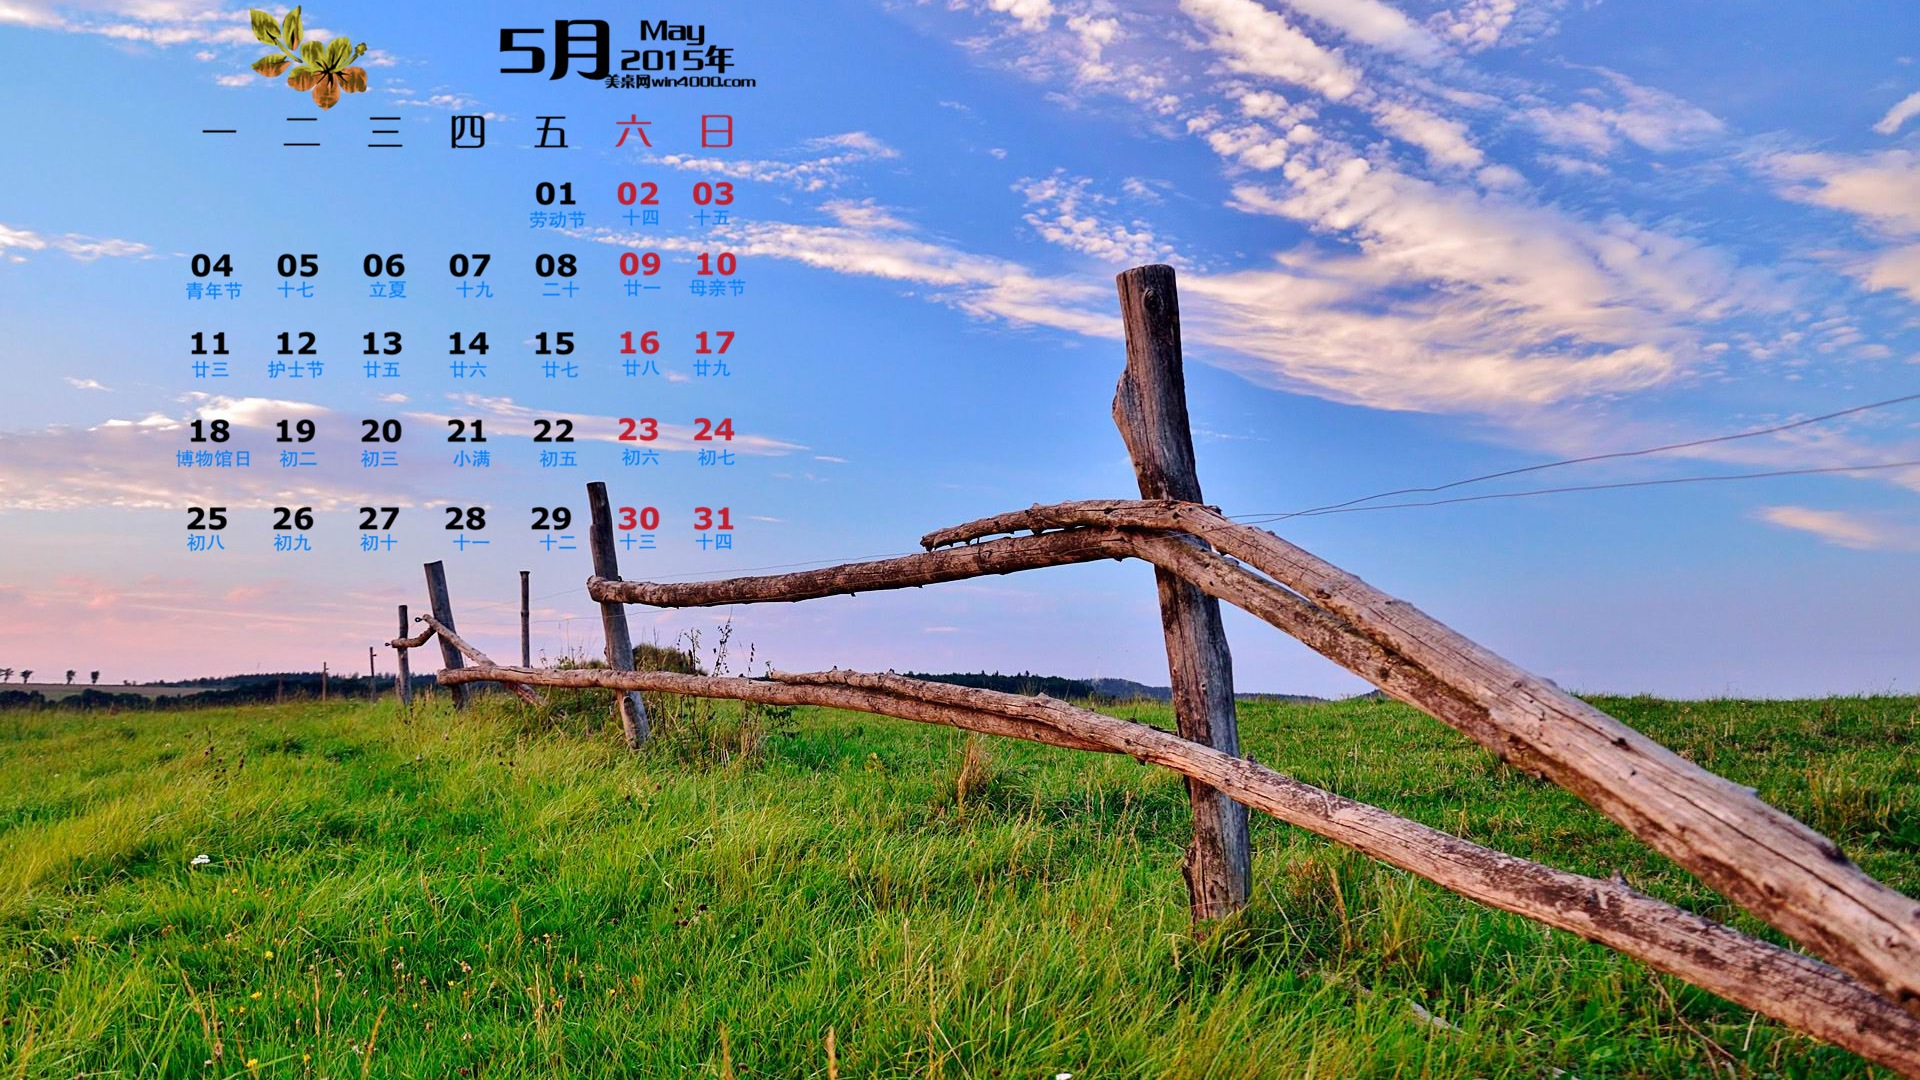 May 2015 calendar wallpaper (1) #9 - 1920x1080